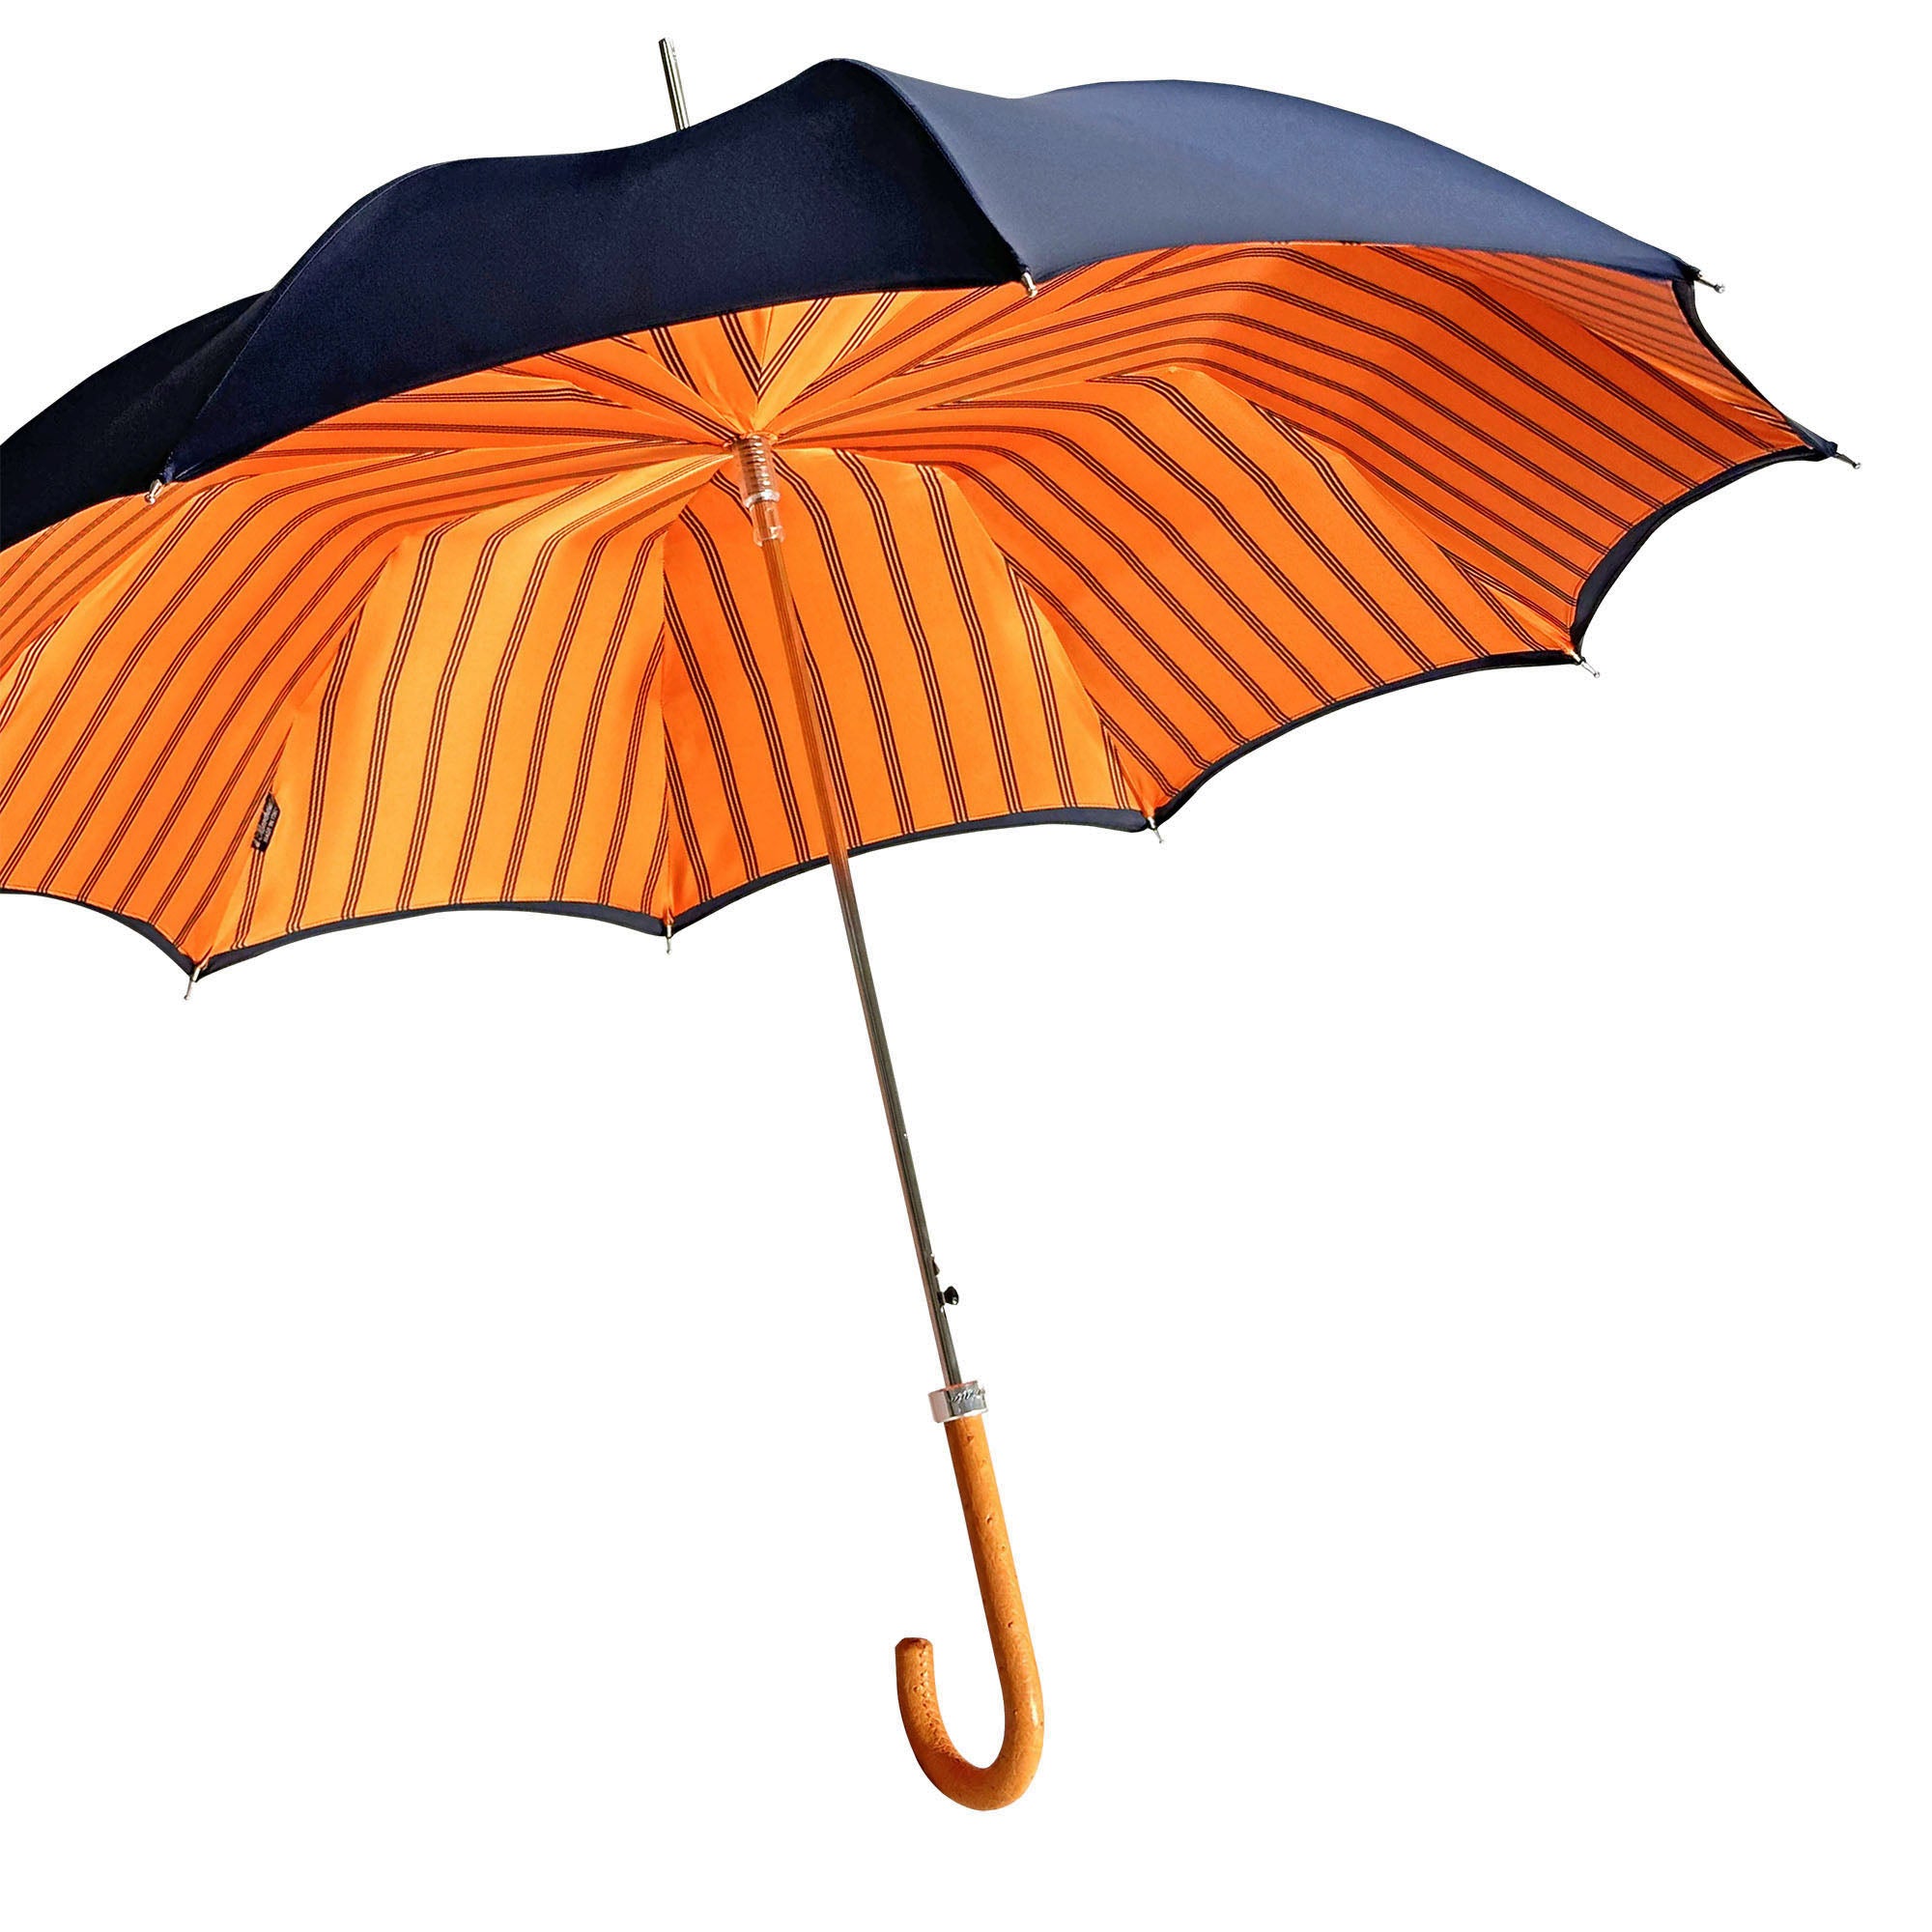 Elegant Man's umbrella with orange ostrich eather handle